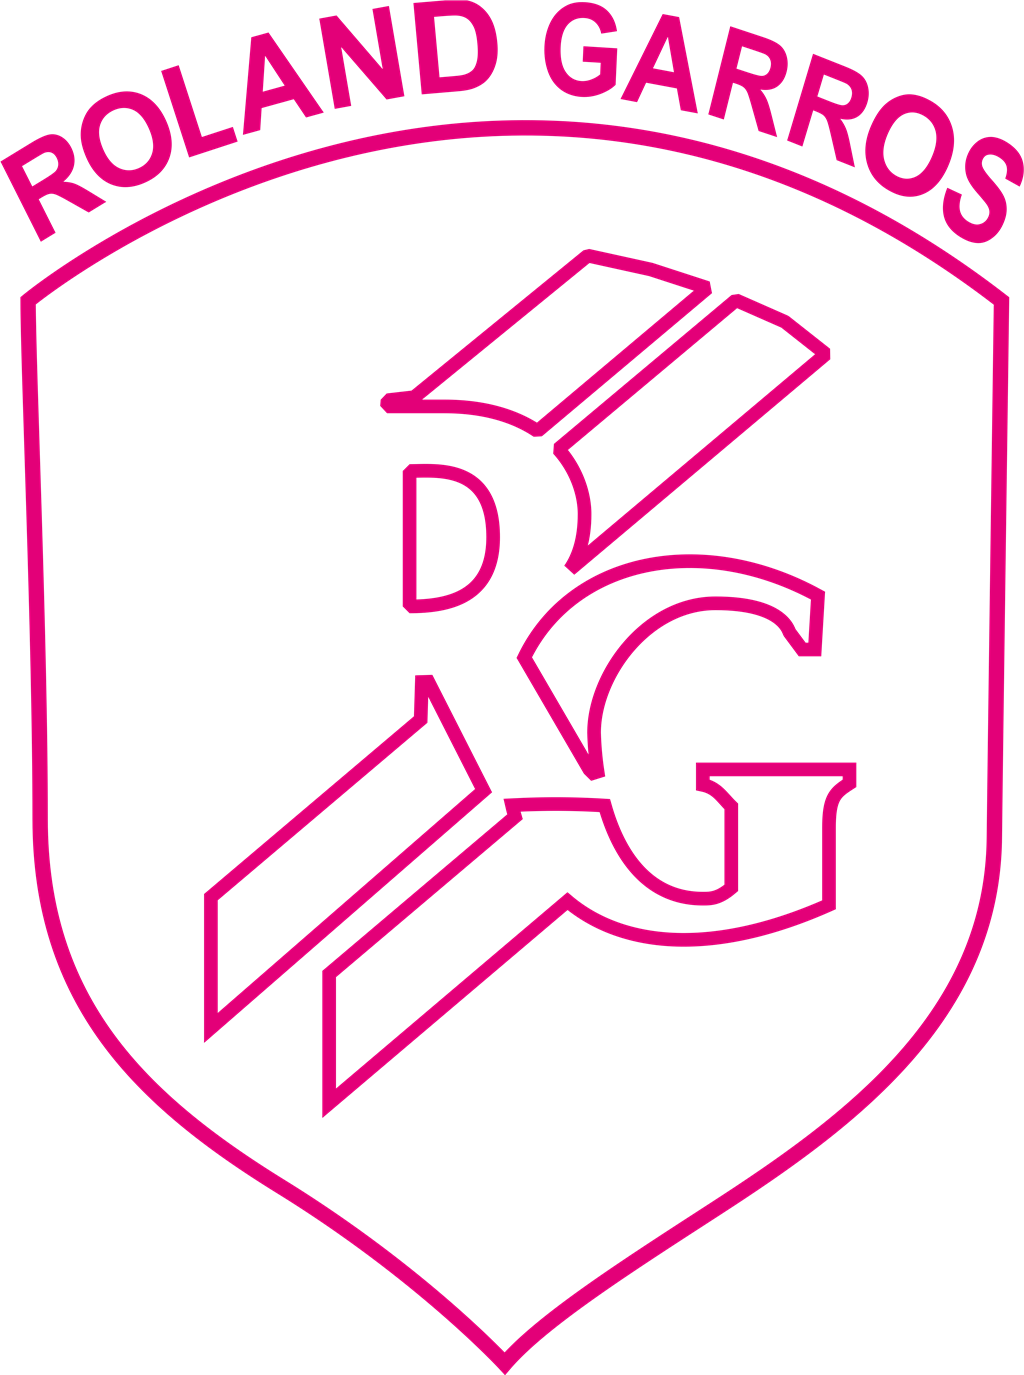 Roland Garros logotype, transparent .png, medium, large